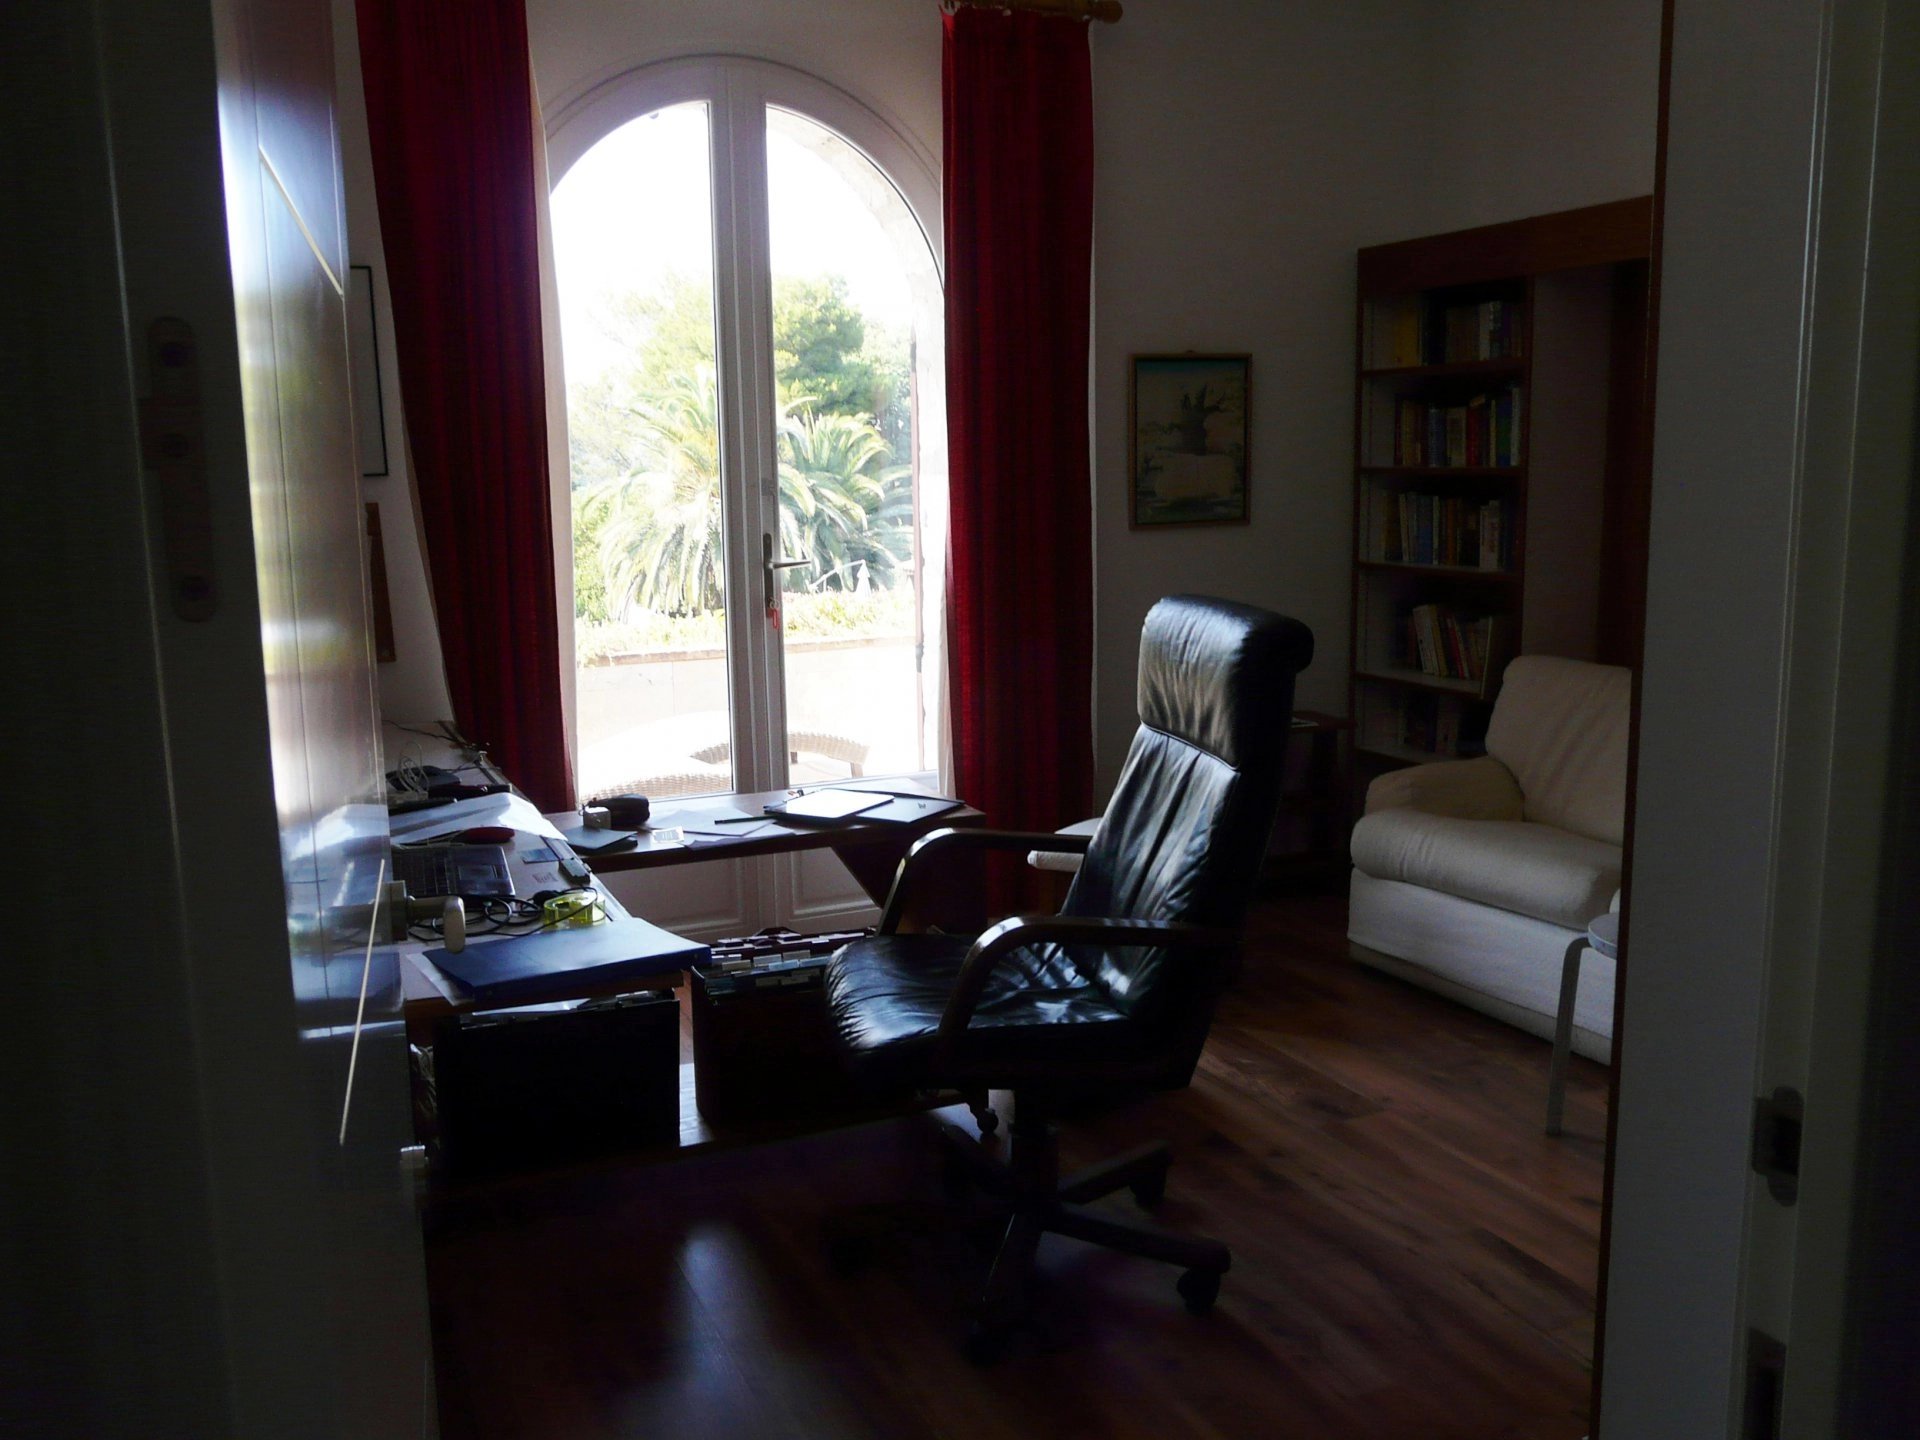 Study of fifth bedroom, natural light, wood floors